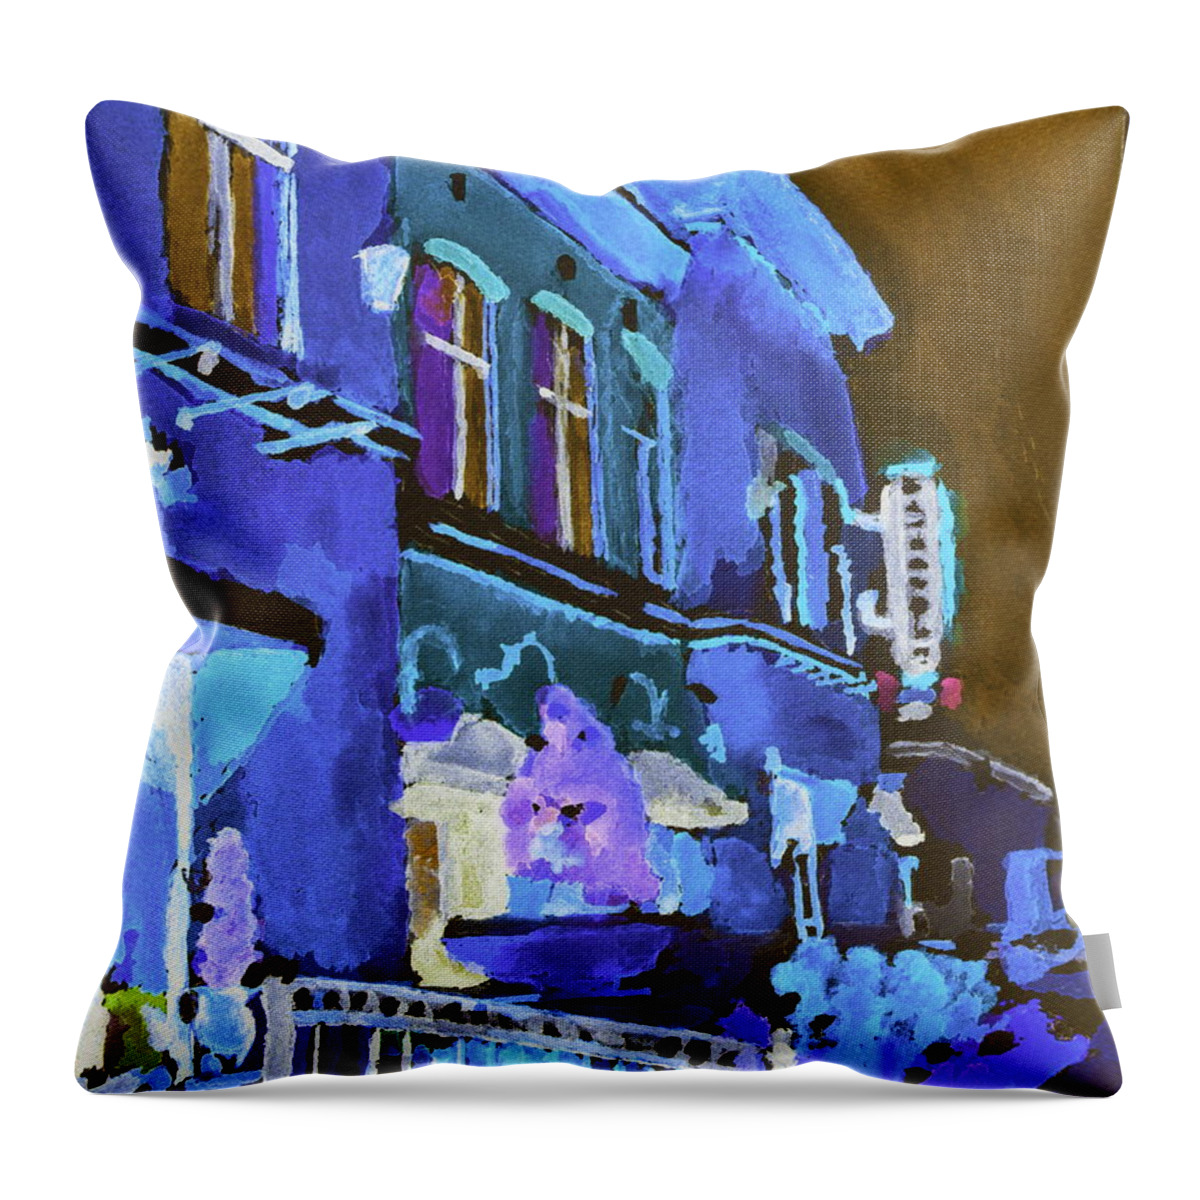 Urban Art Throw Pillow featuring the painting Urban Art by Ruben Carrillo